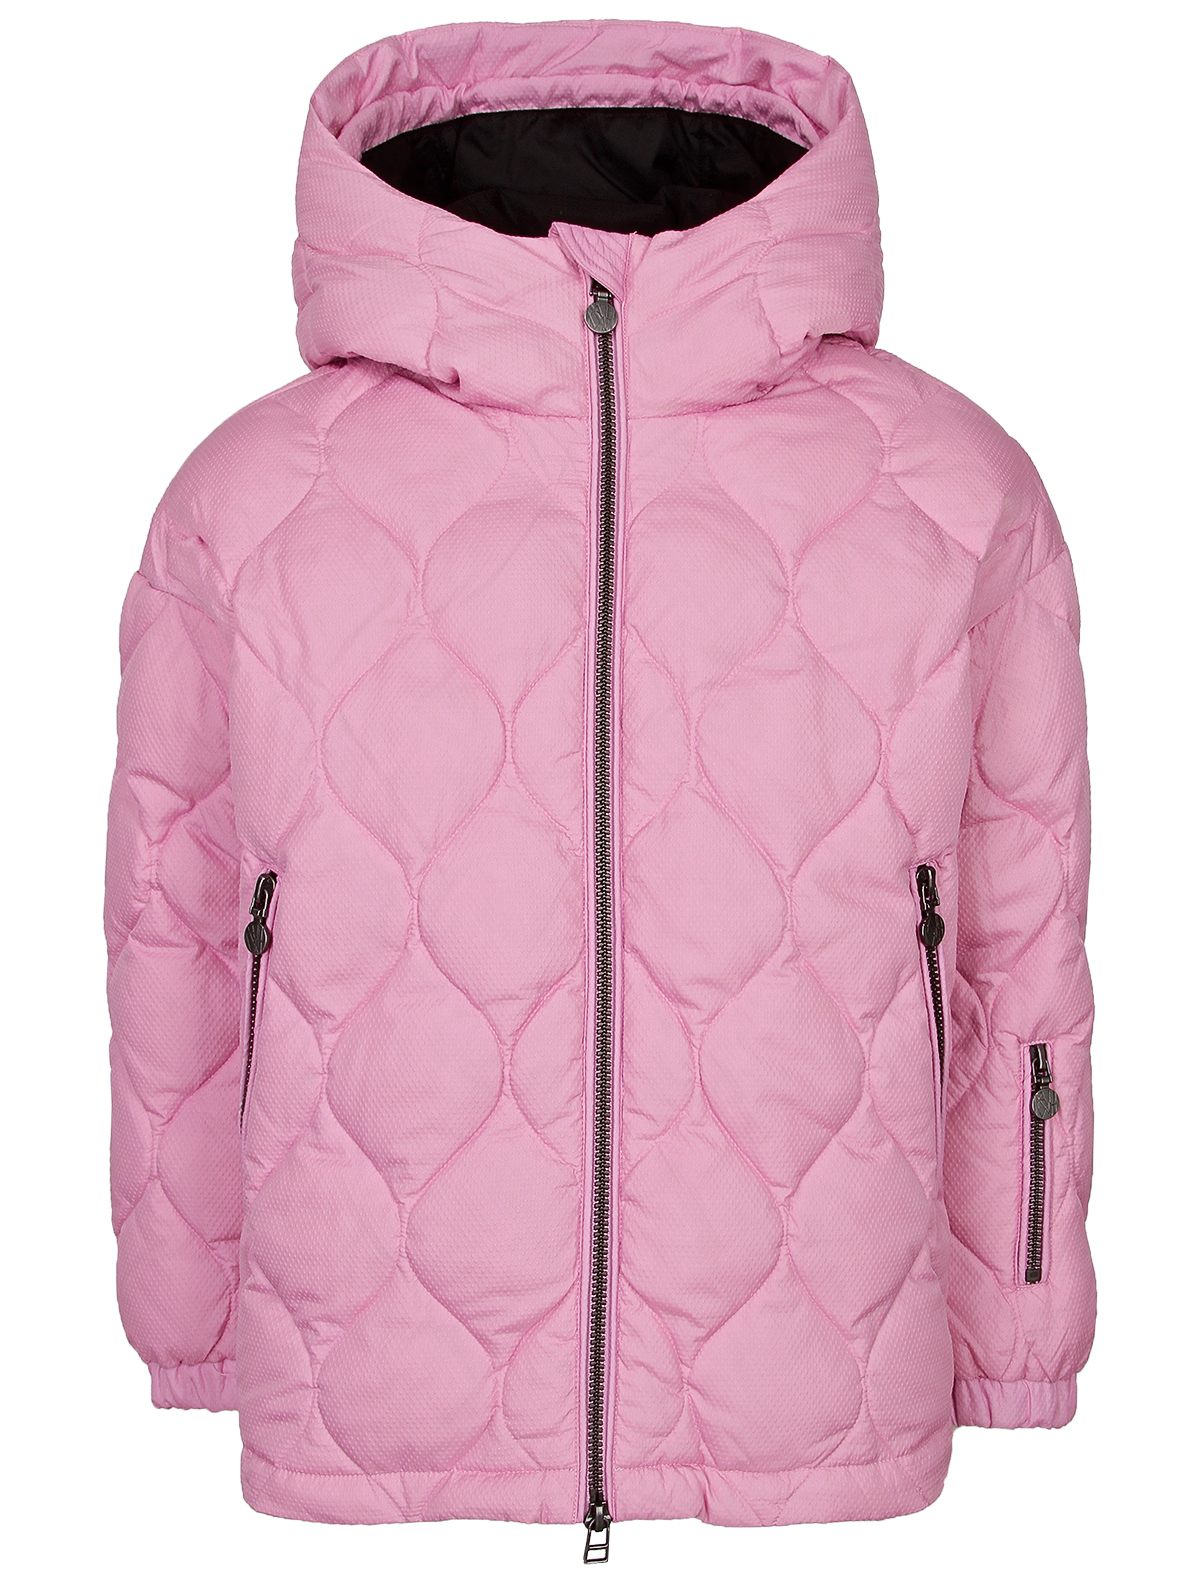 Куртка NAUMI розового цвета